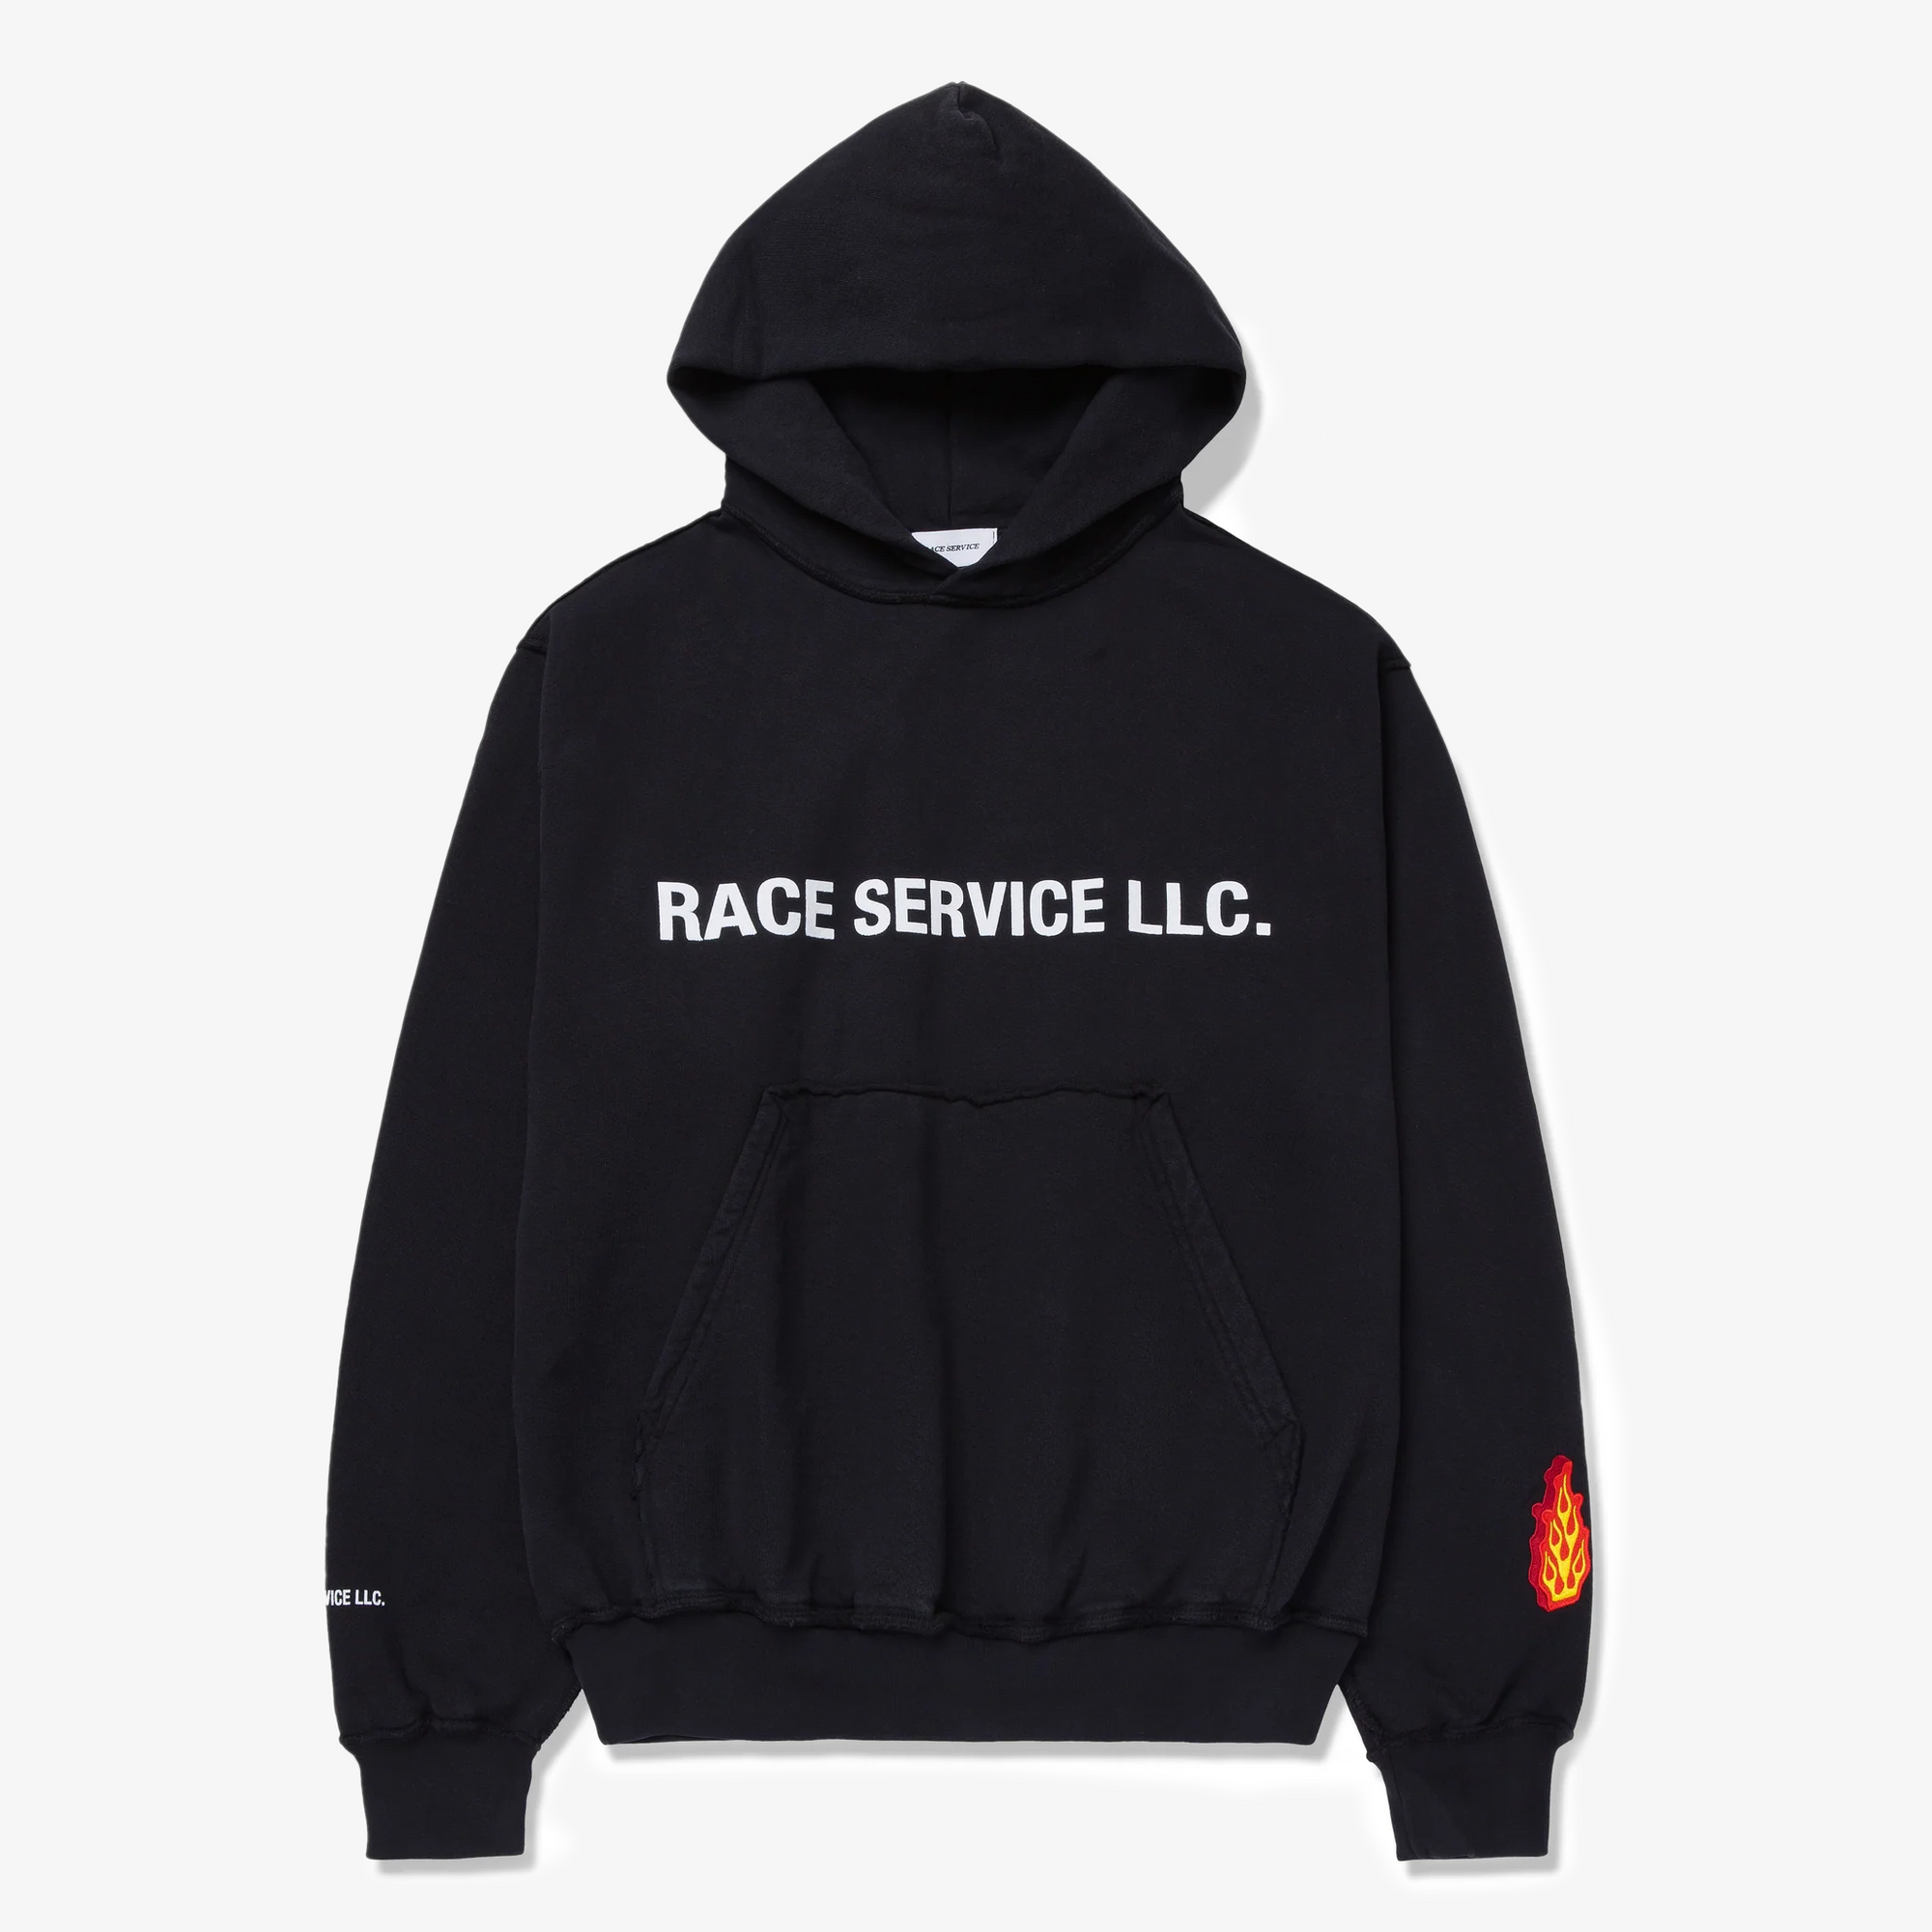 RACE SERVICE LLC. HOODIE